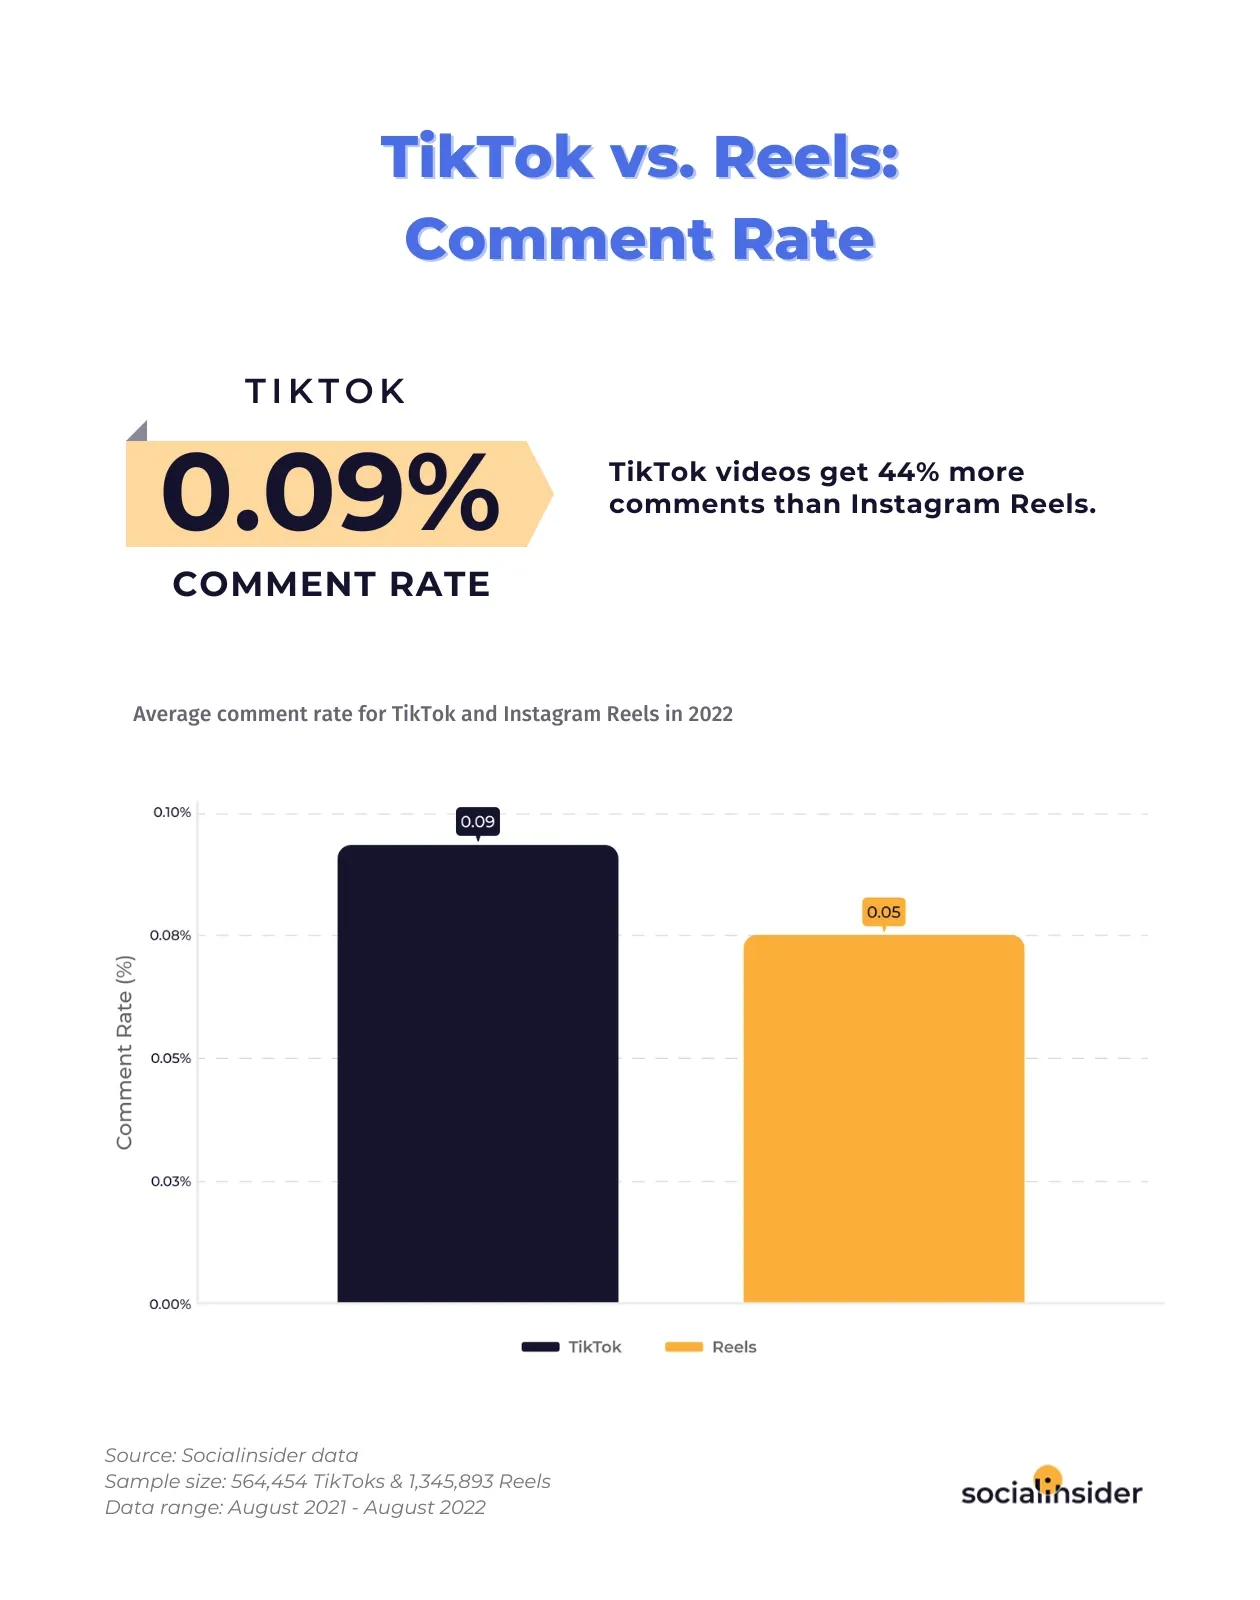 Comment Rate on TikTok vs Reels